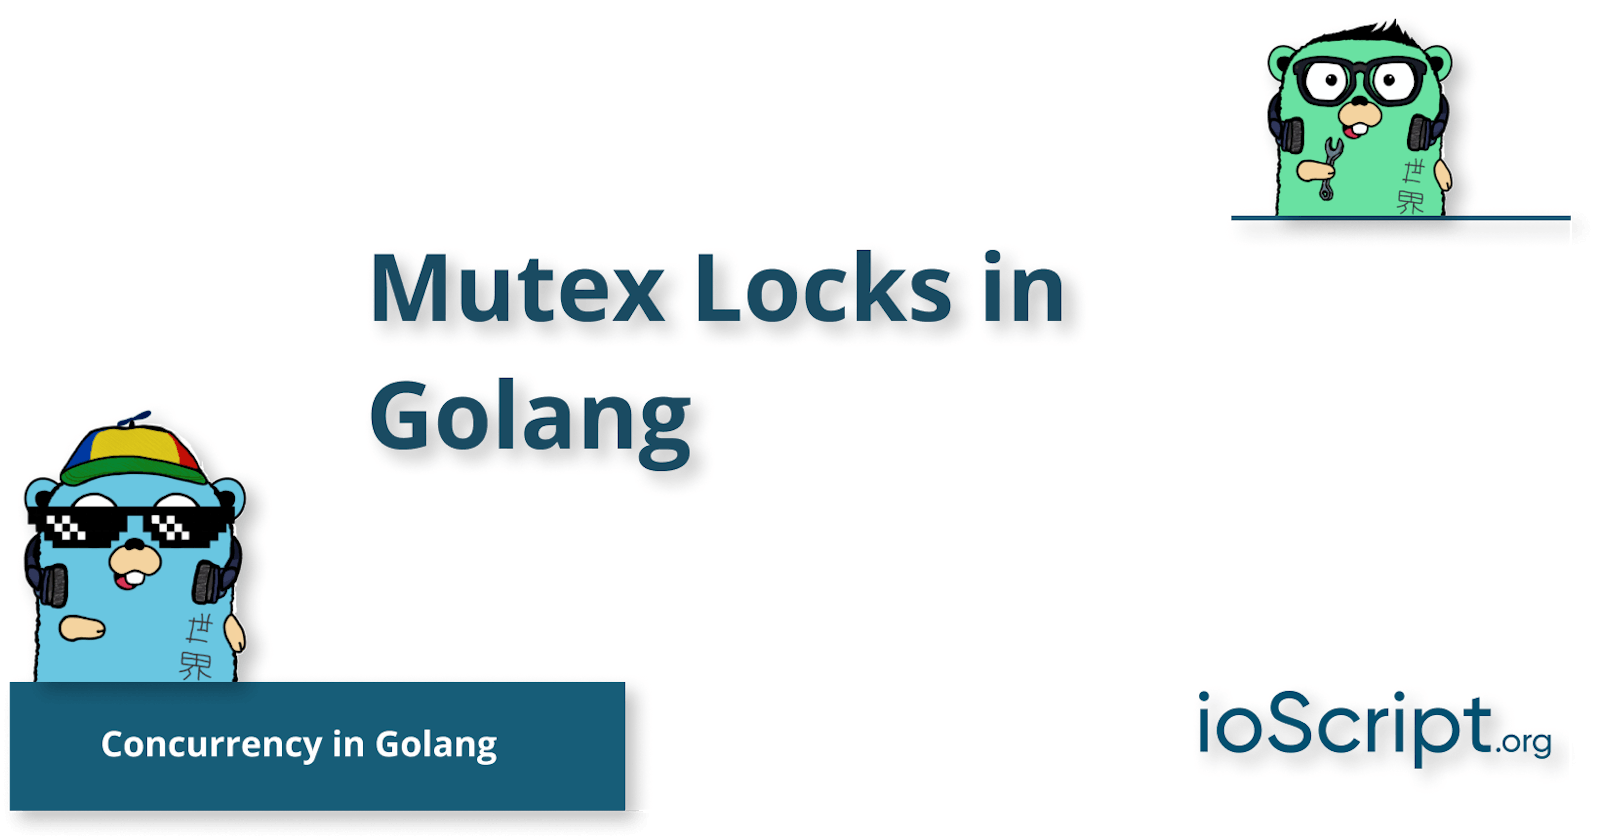 Mutex locks in Golang